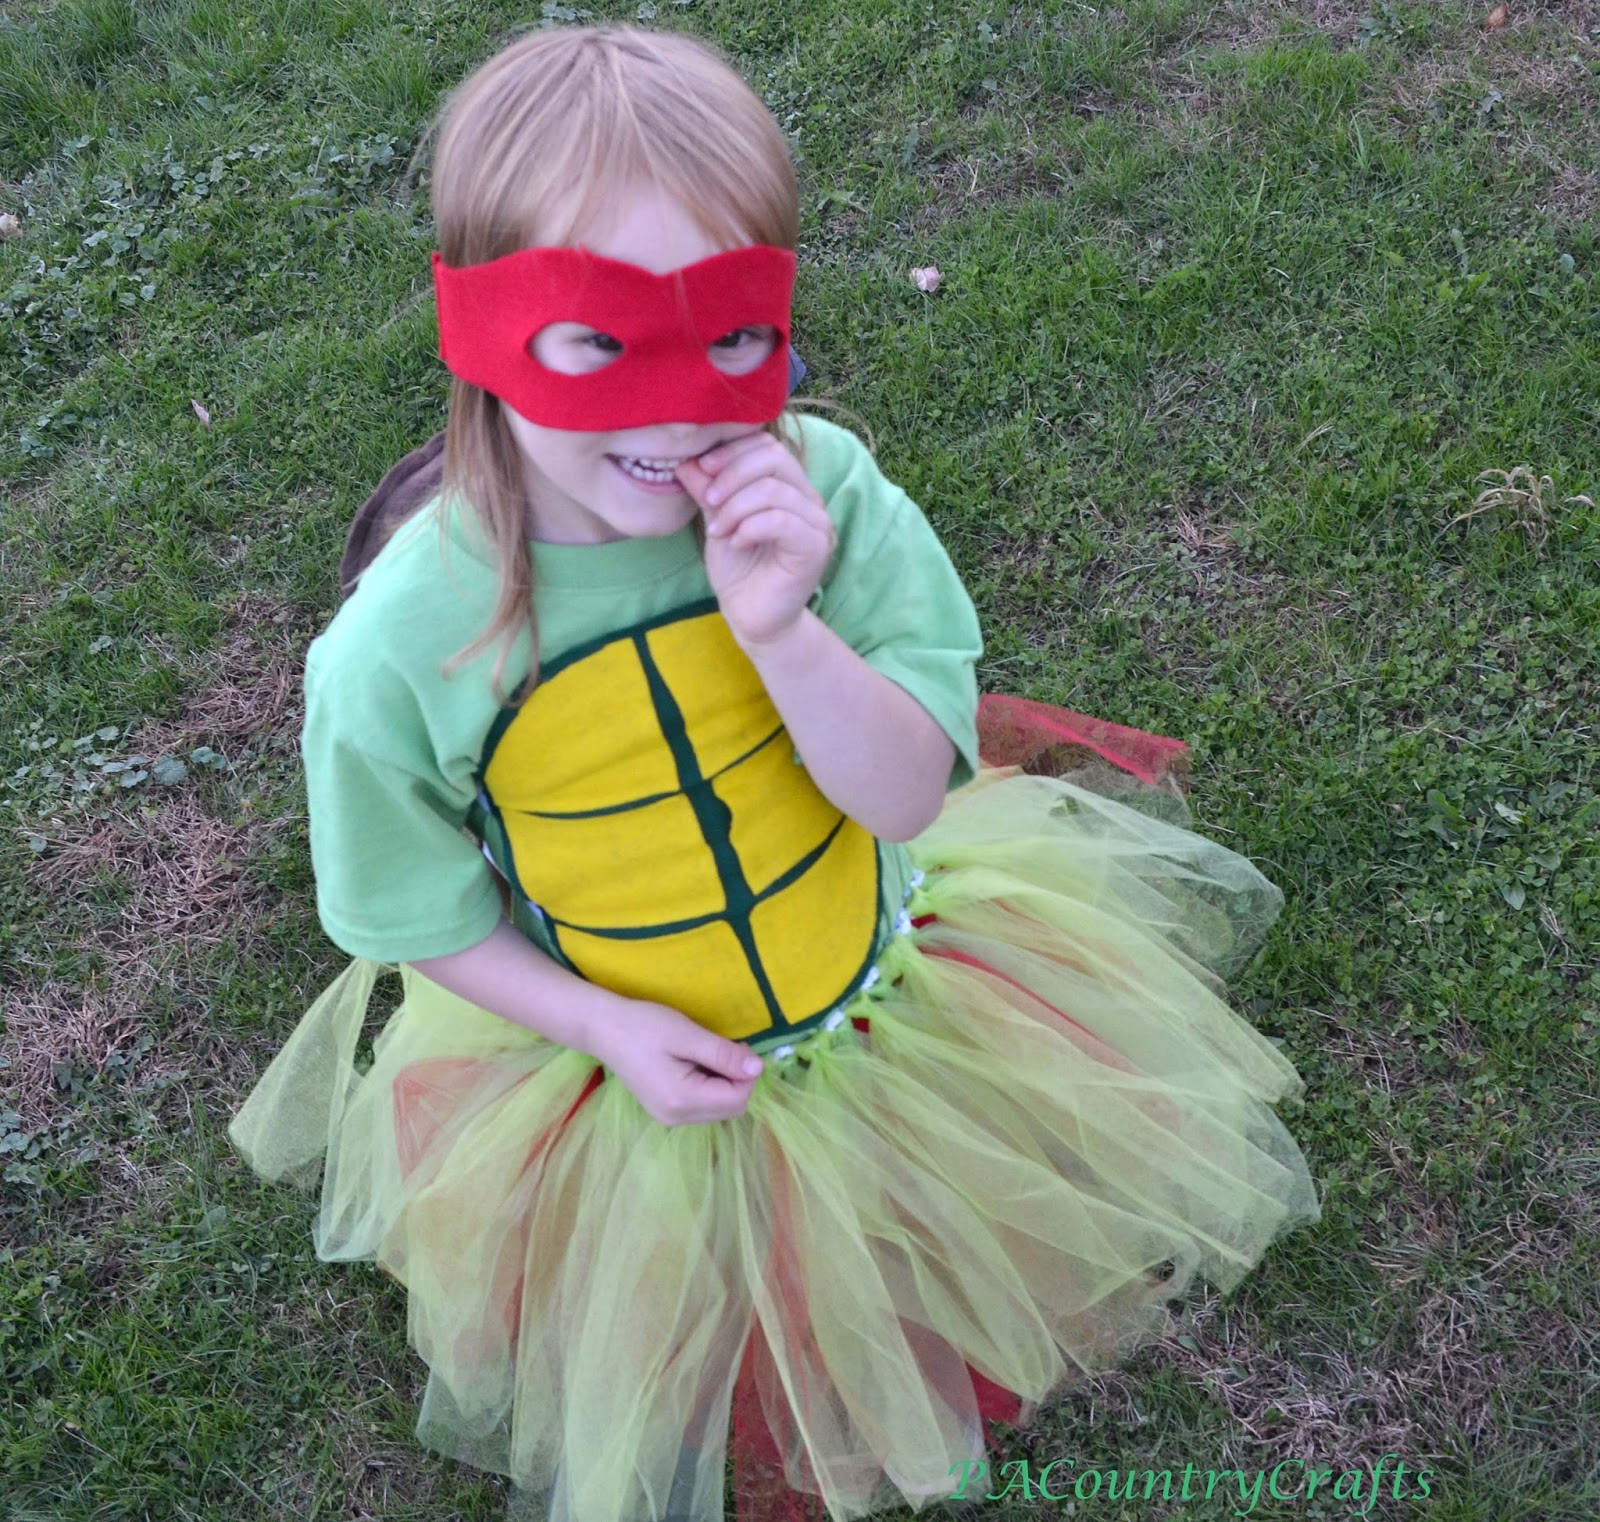 DIY Ninja Turtle Costume With Tutu
 DIY Girls’ Ninja Turtle Costumes with TUTUS